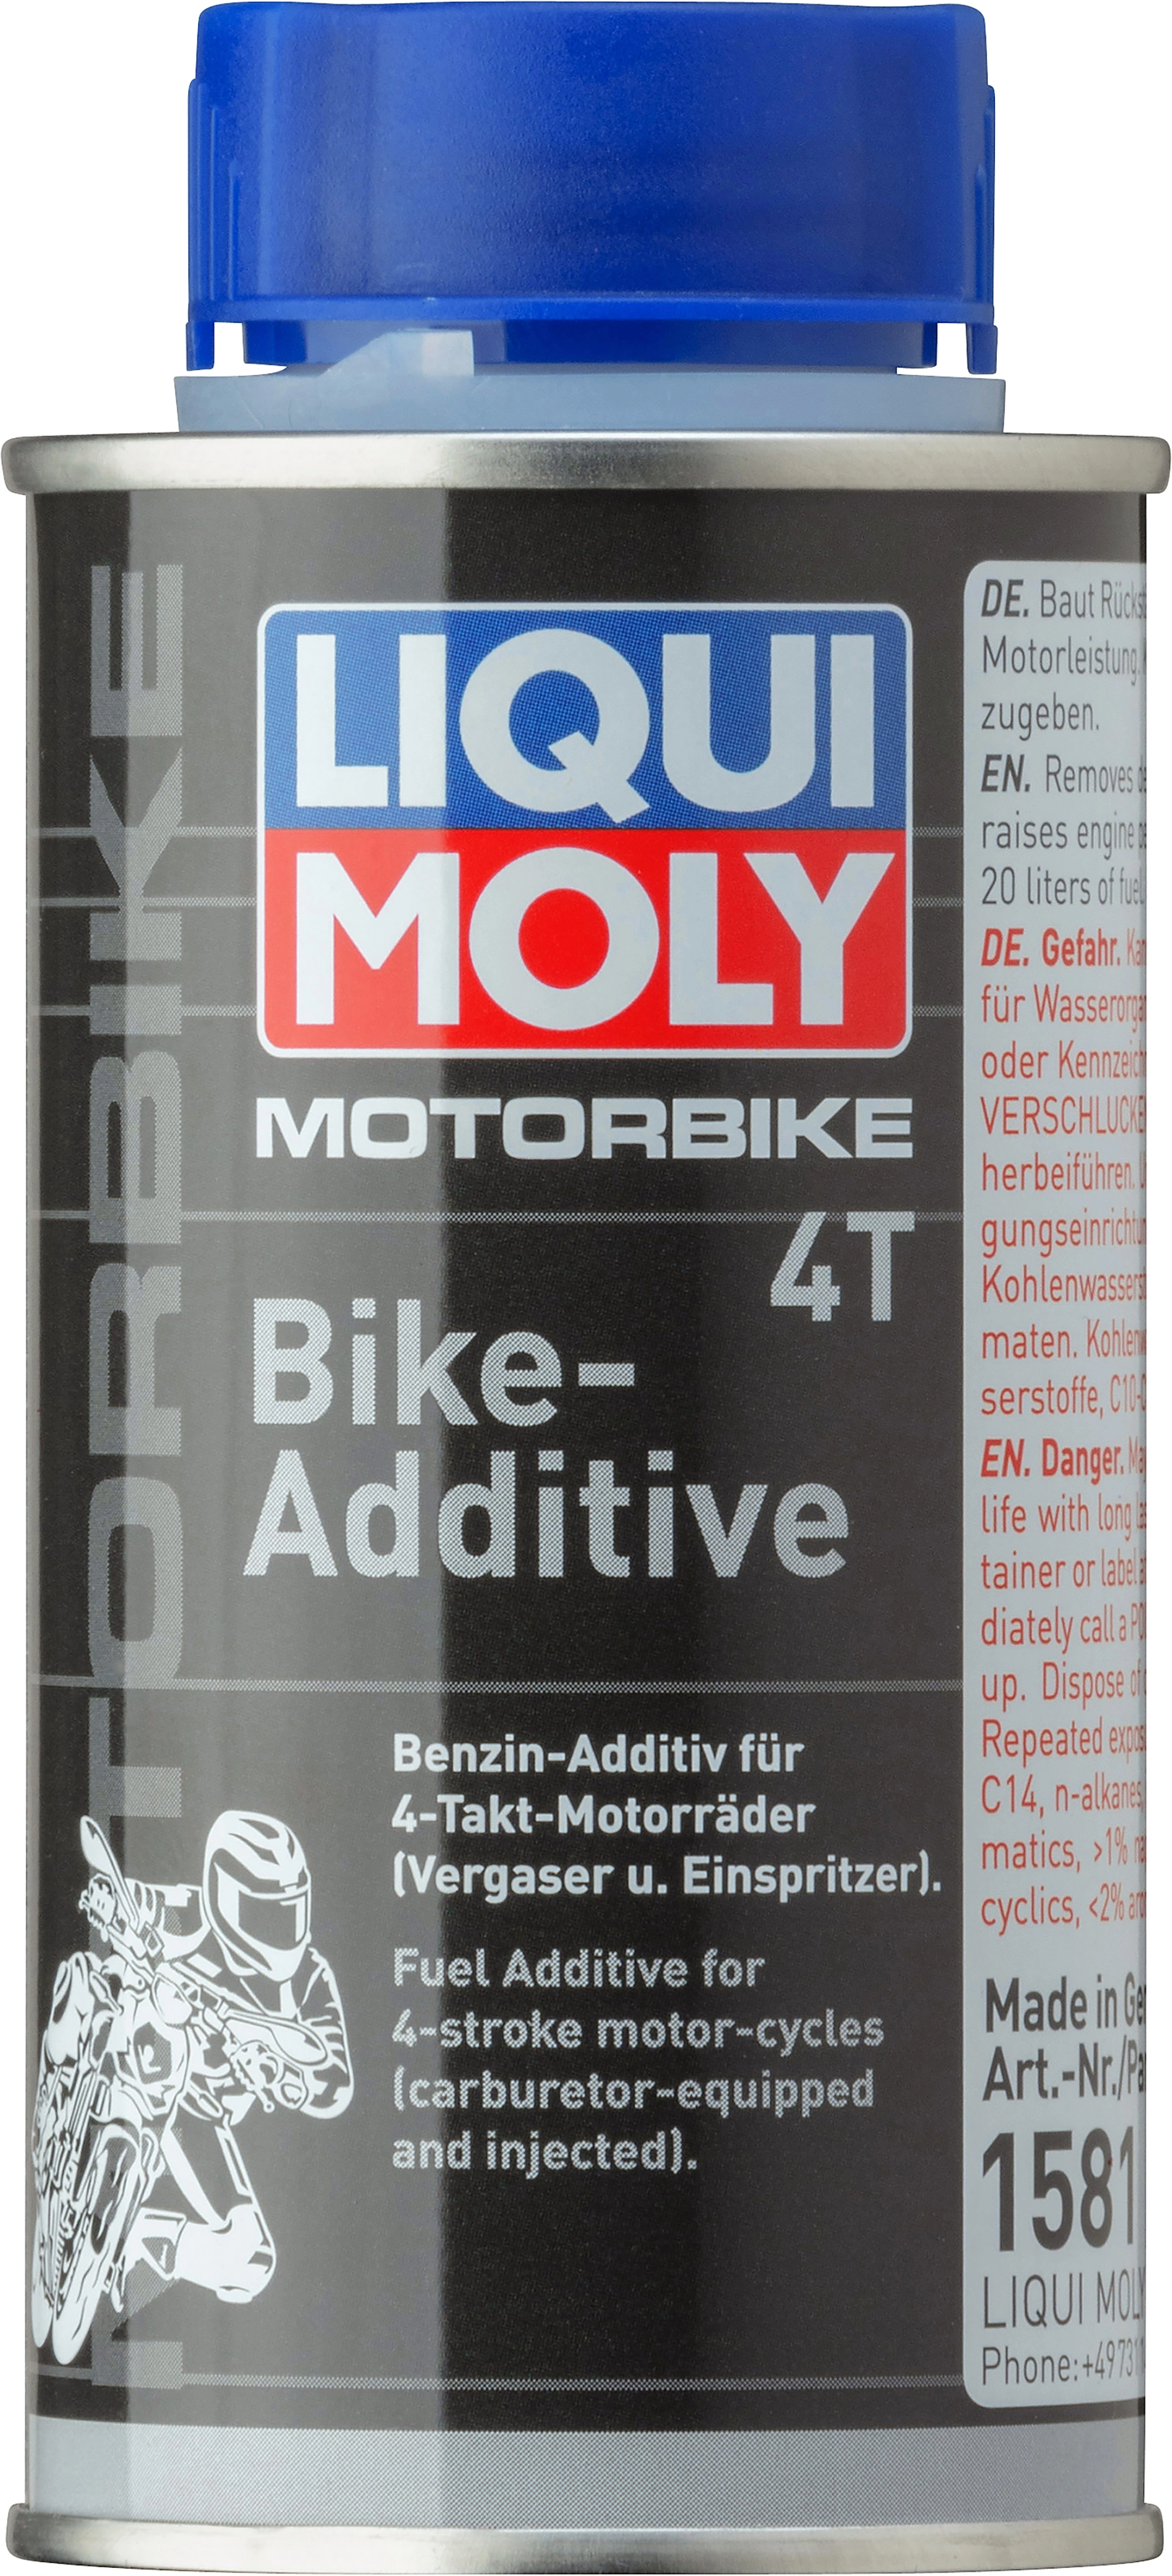 Liqui Moly Motorbike 4T Bike-Additive 125 ml kaufen bei OBI